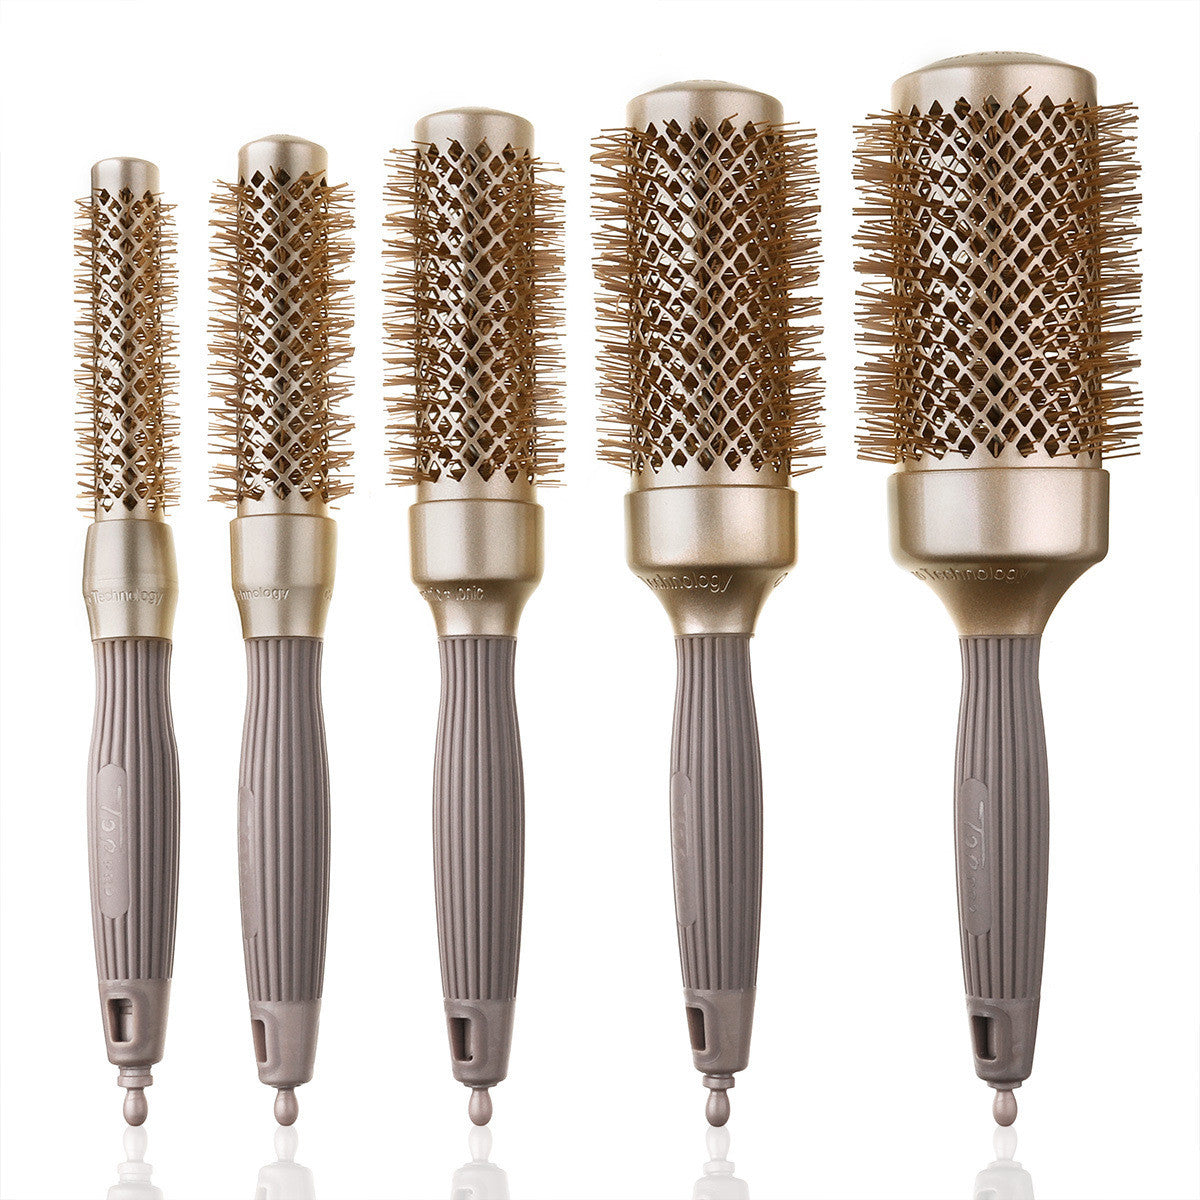 Ceramic curl comb set - SELFTRITSS